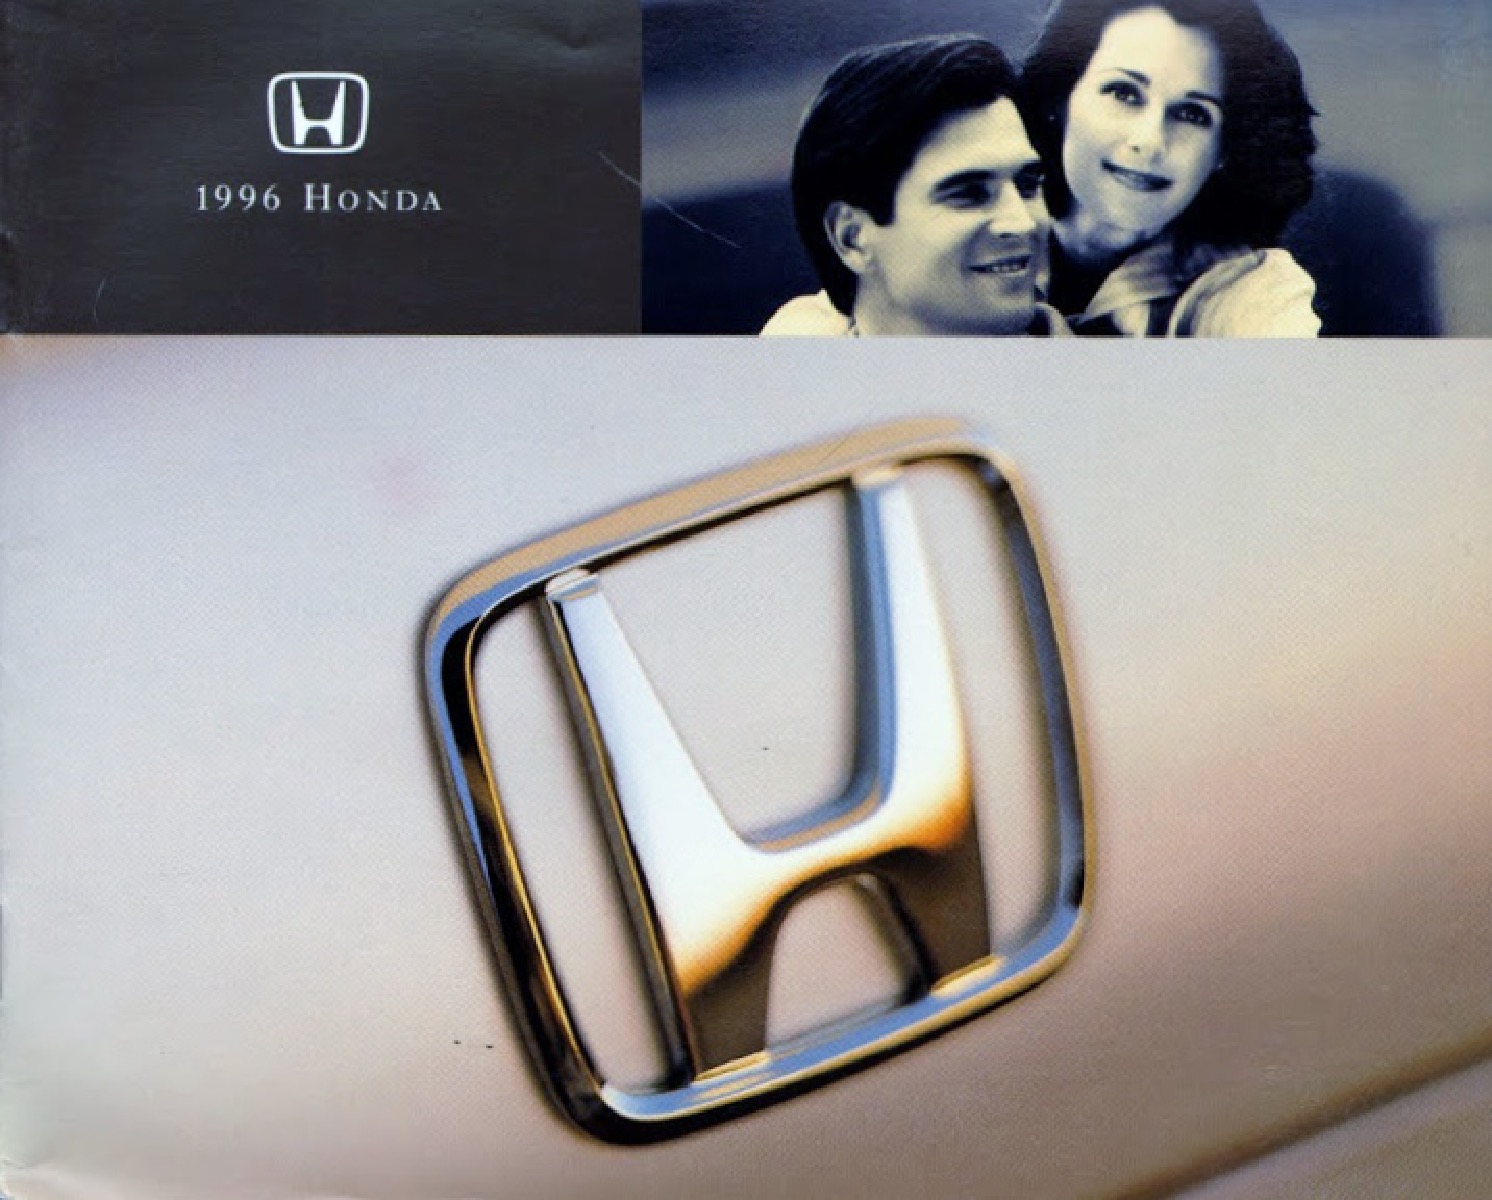 1996 Honda Model Range Brochure